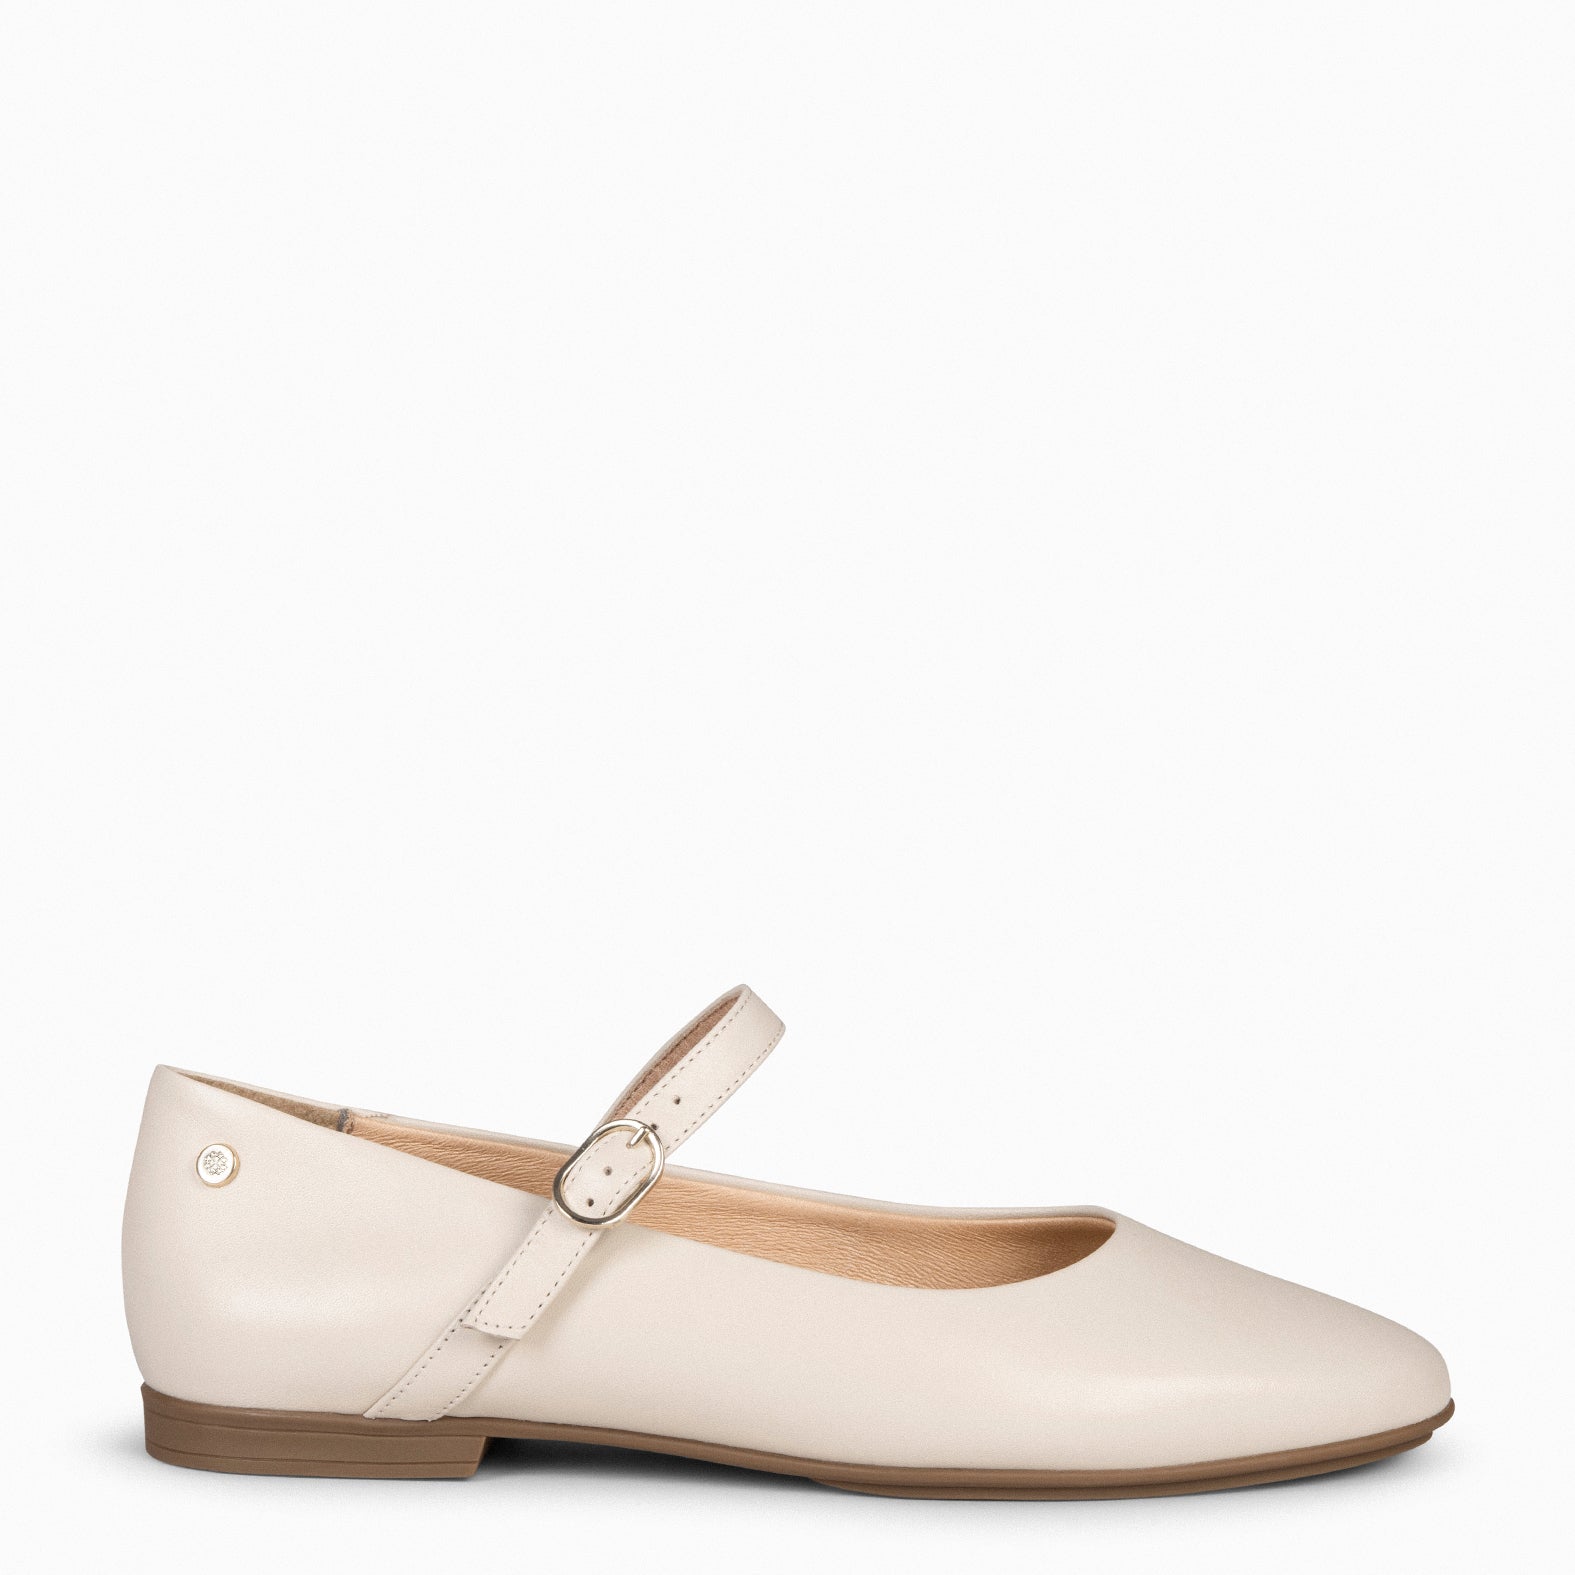 ROSALIE – BEIGE rounded toe Mary-Janes